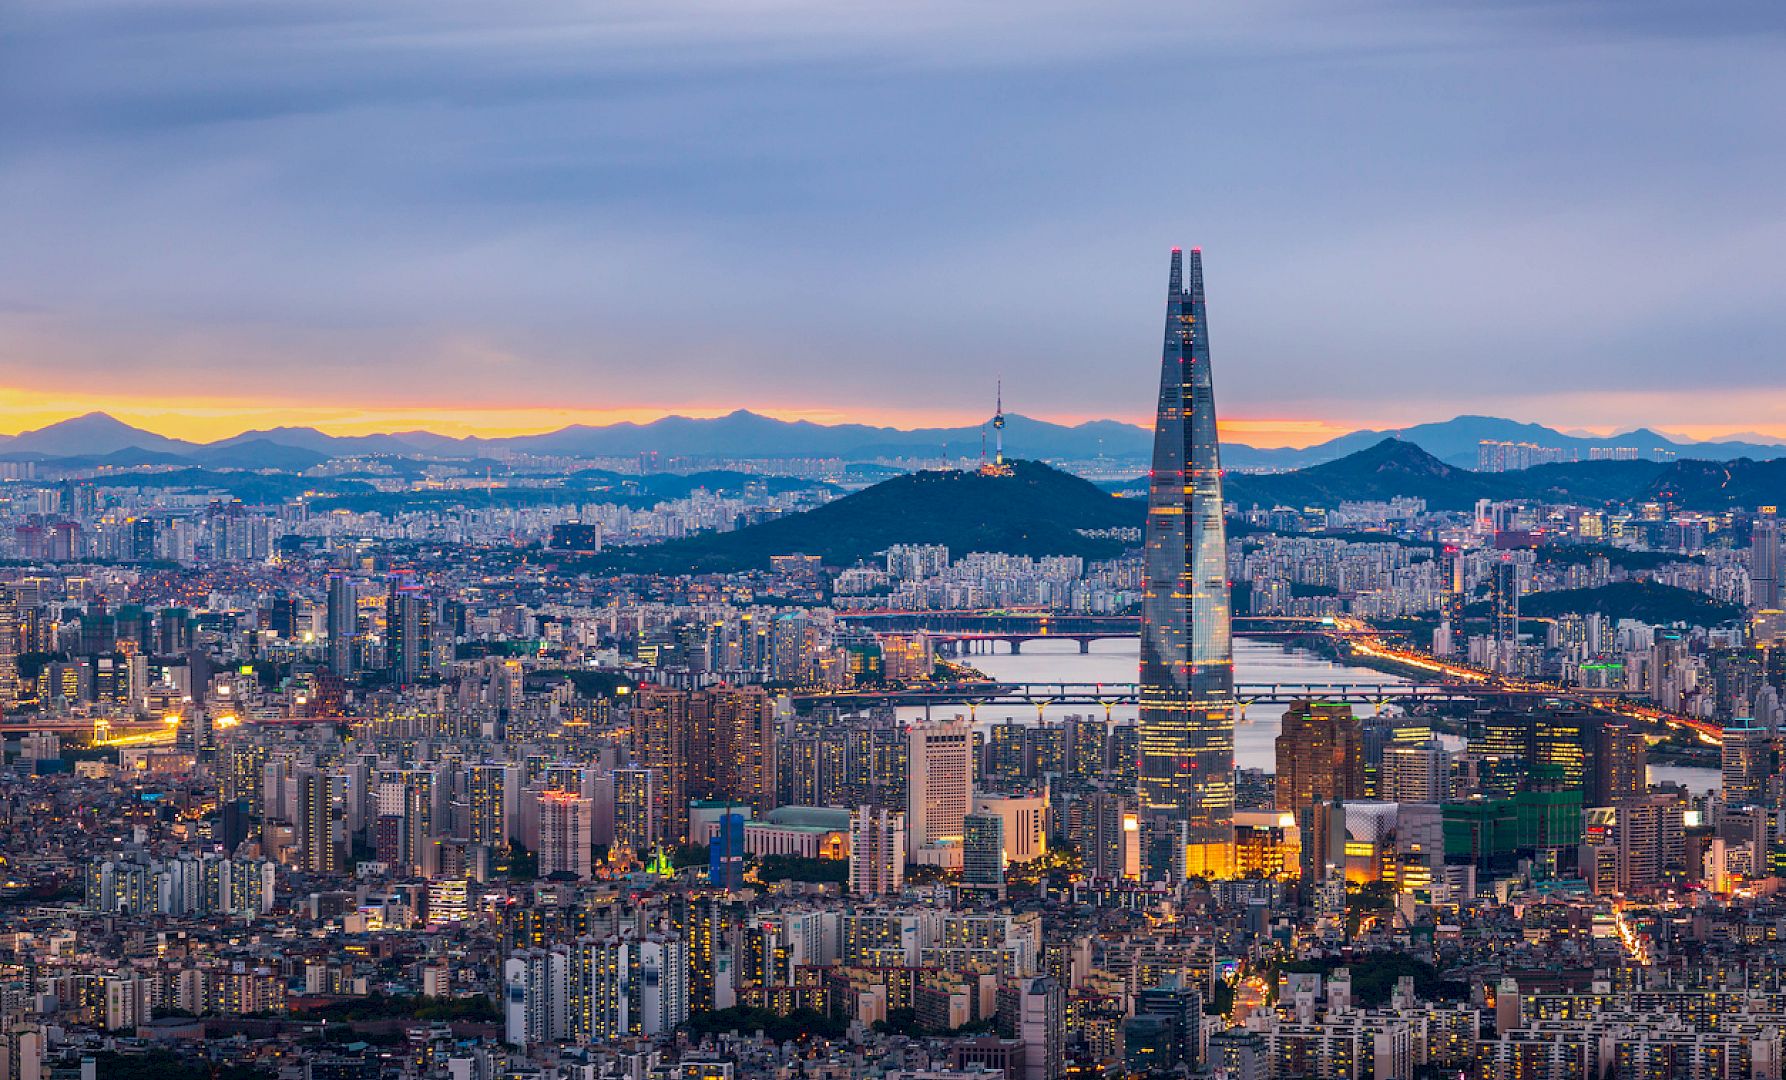 South Korea – an interesting market for European companies